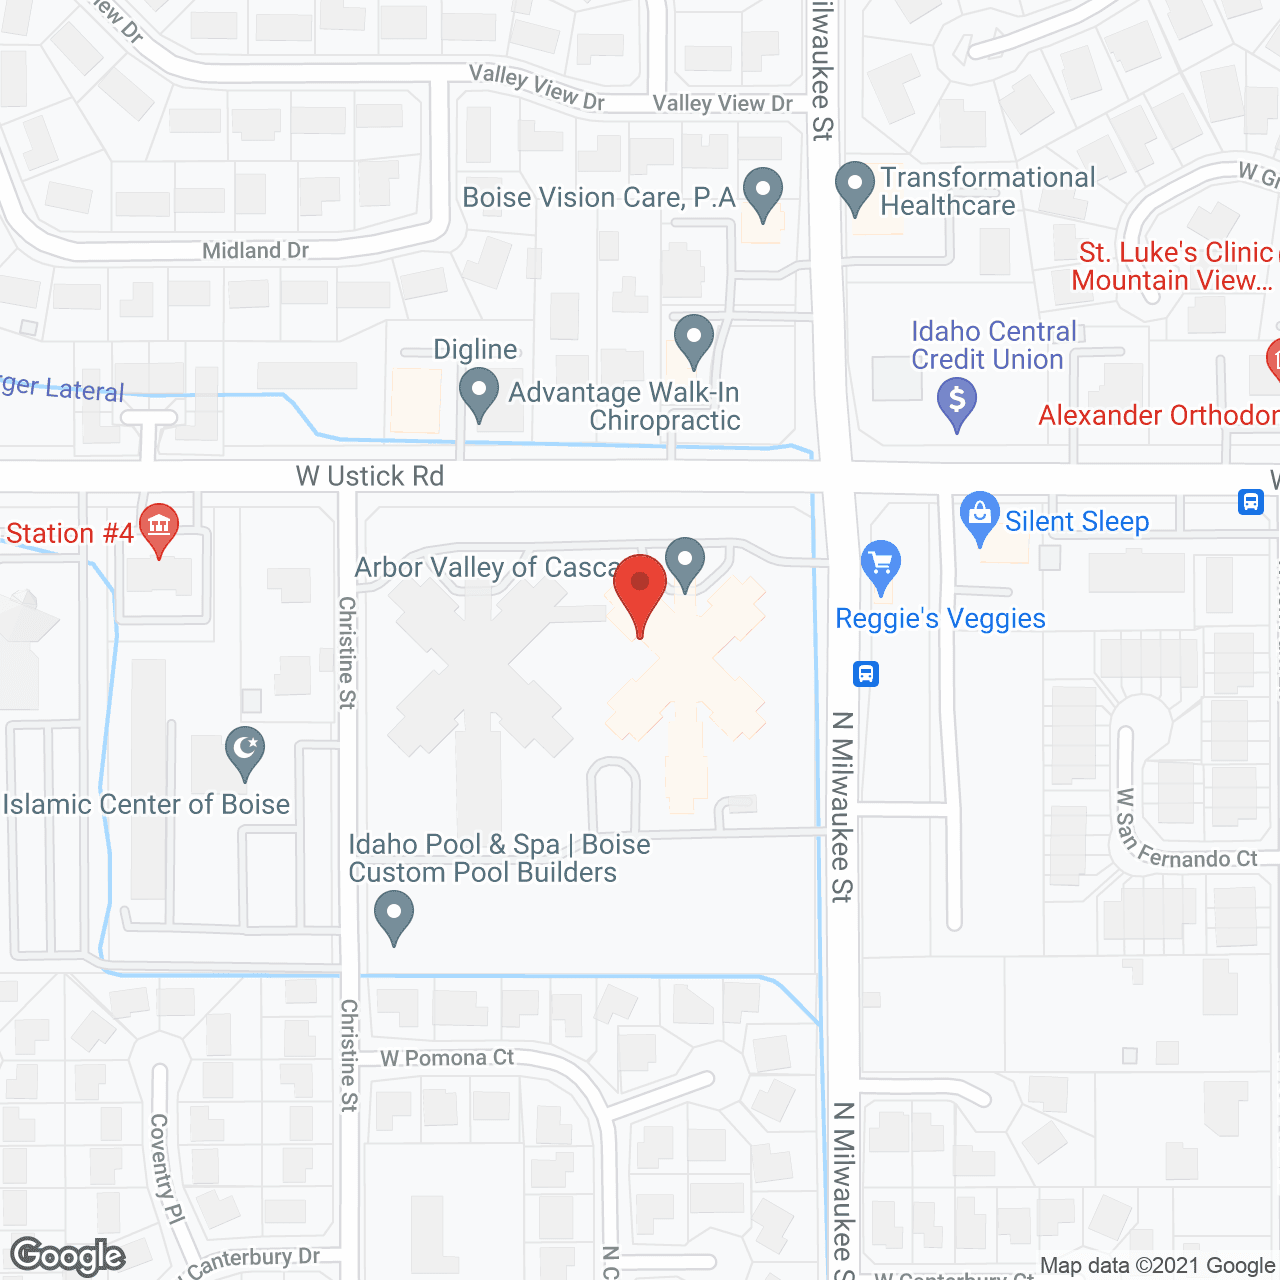 Apex Center in google map